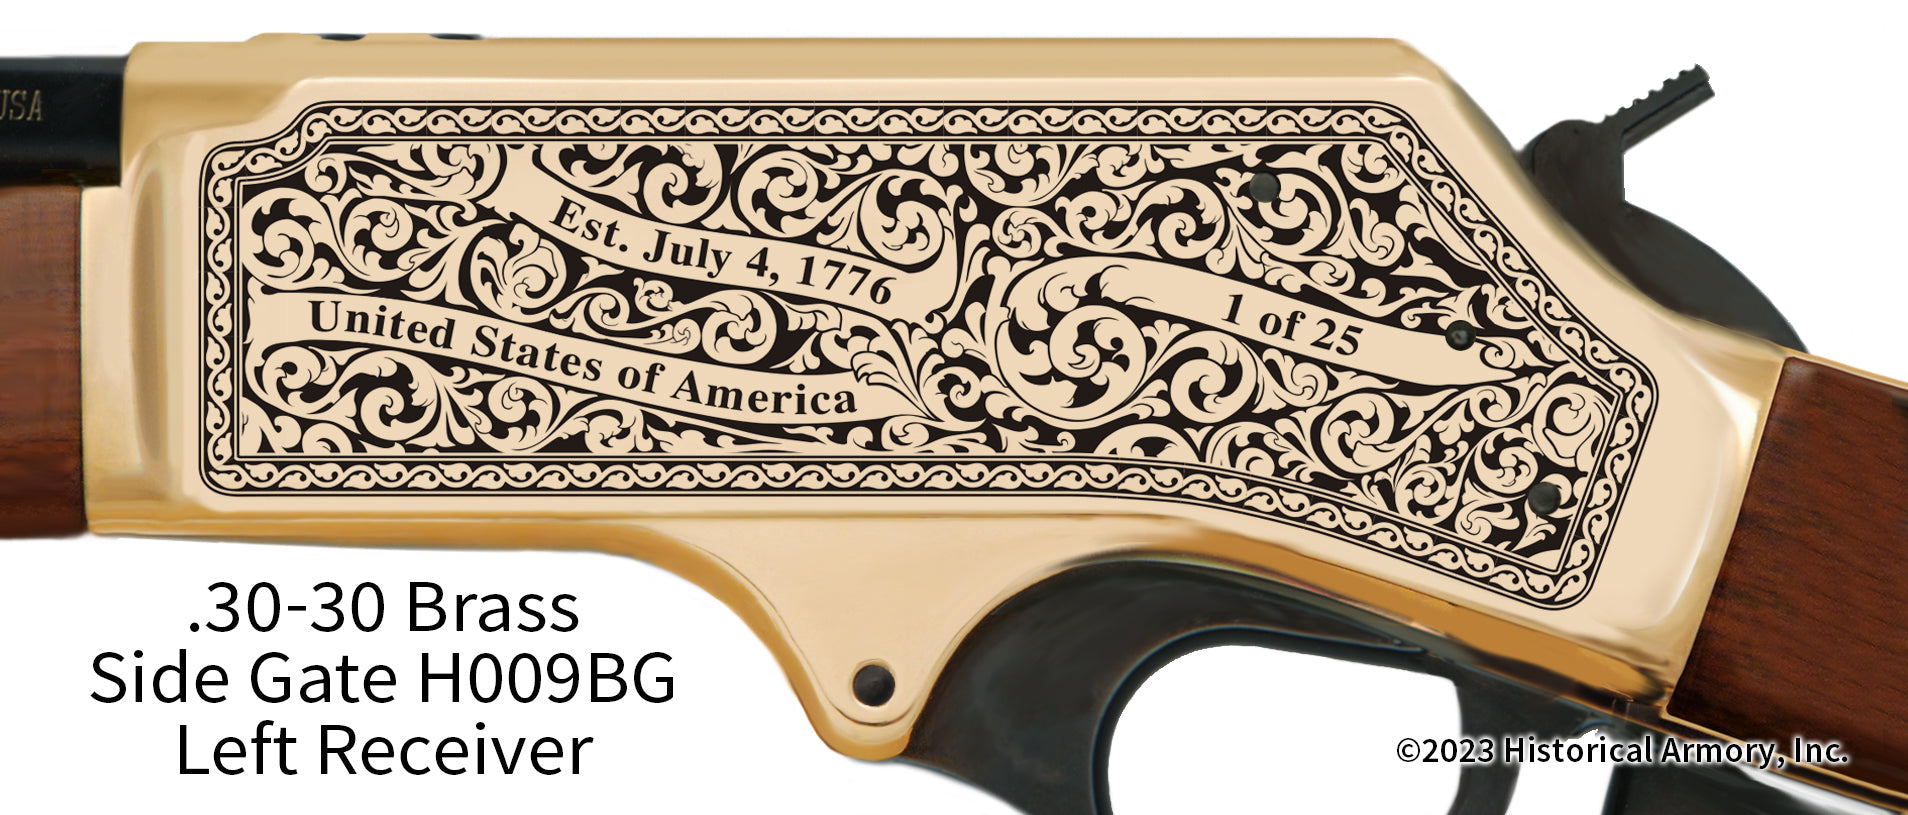 Webster County Nebraska Engraved Henry .30-30 Brass Side Gate Rifle